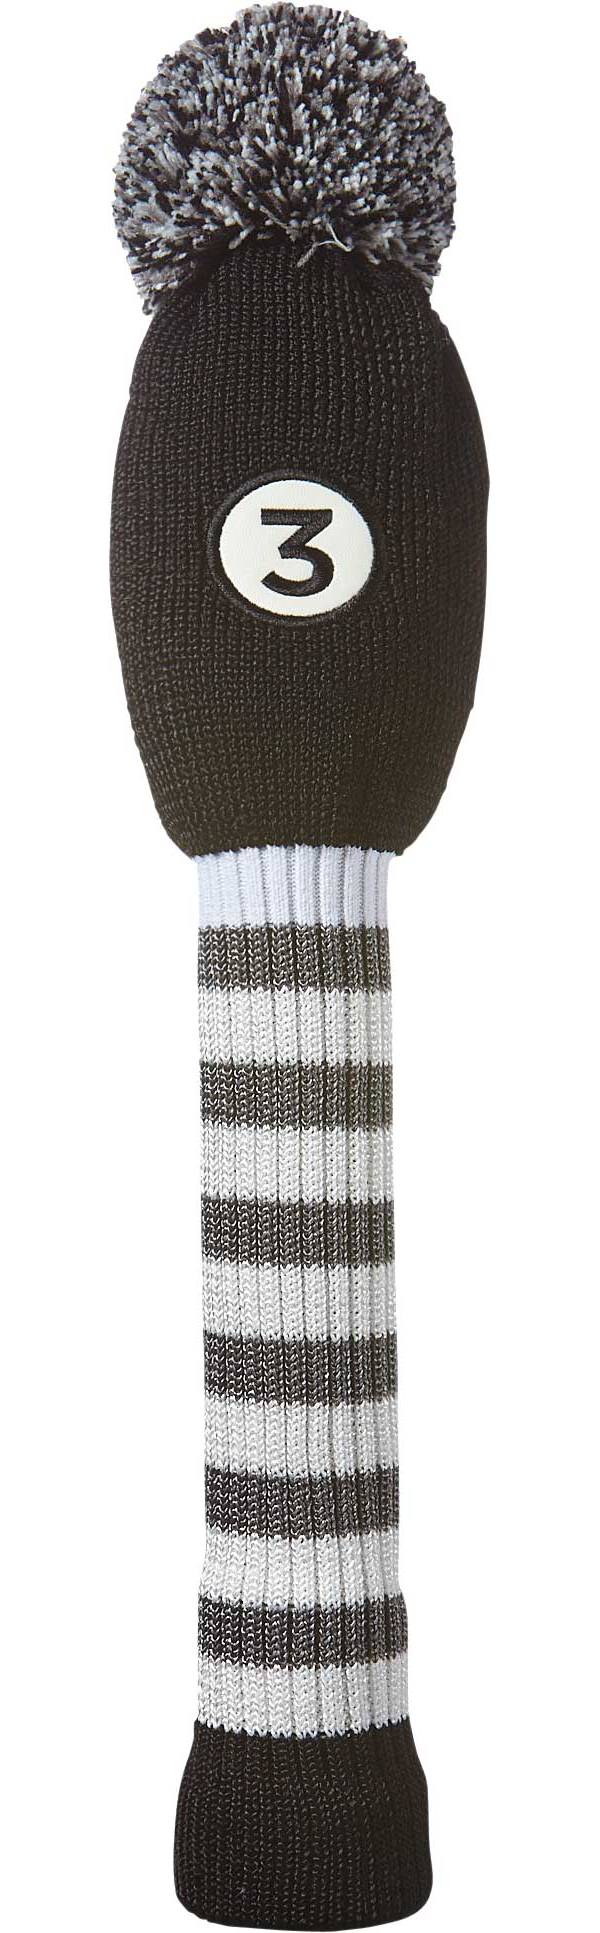 Maxfli Vintage Knit Fairway Wood Headcover Golf Galaxy